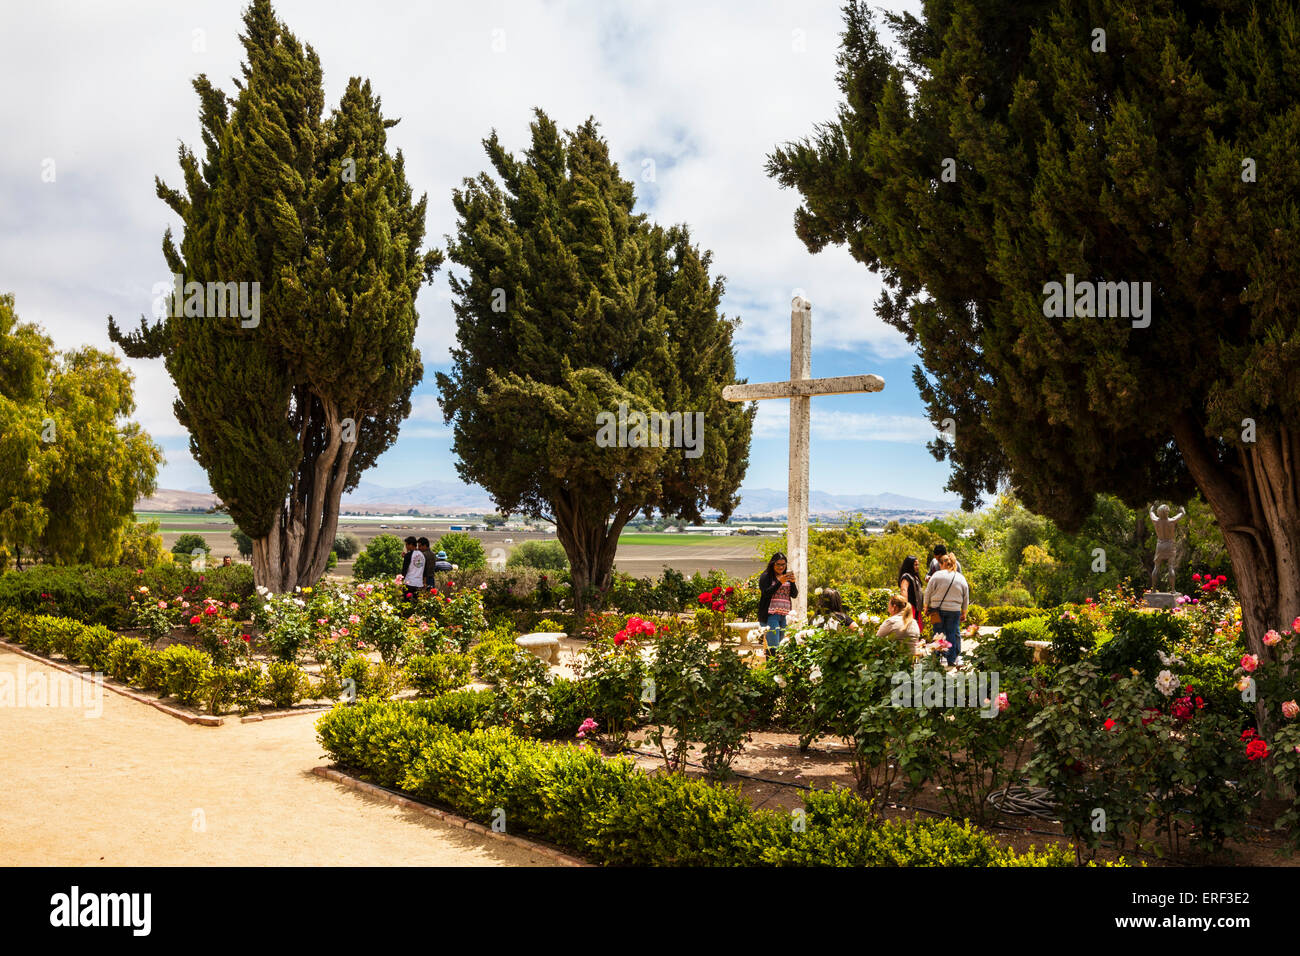 The Garden at Mission San Juan Bautista in California Stock Photo